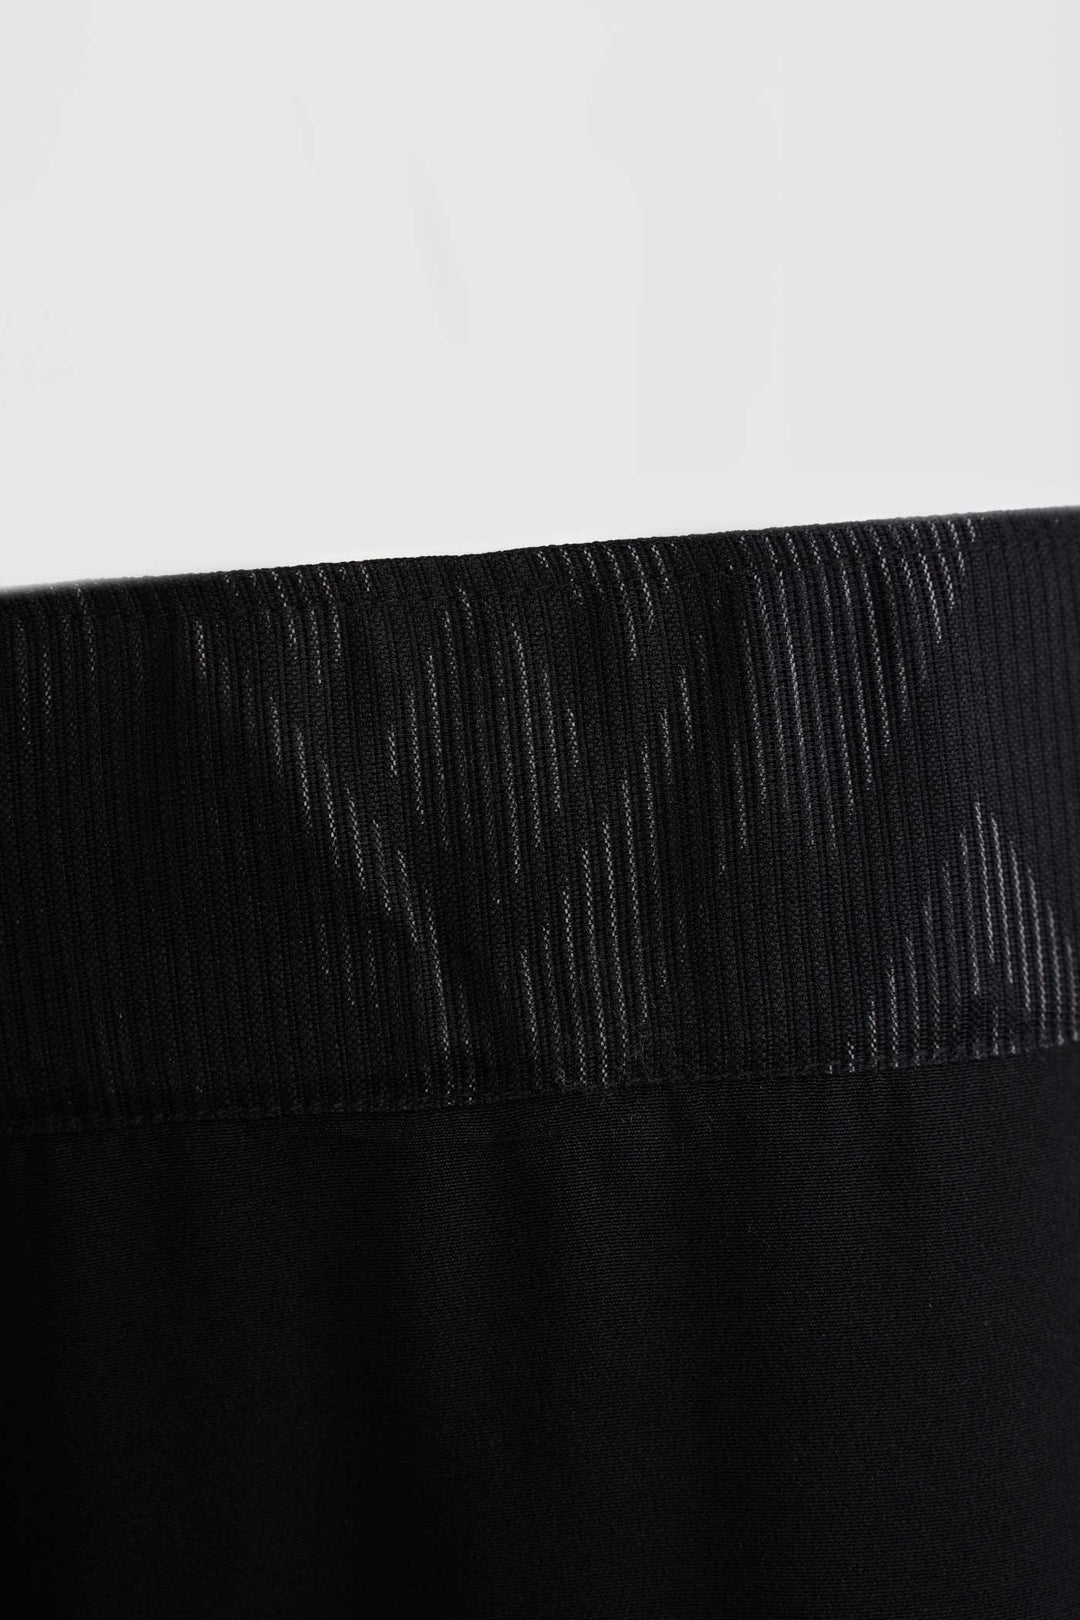 Black Silk Straight Pants with Brocade-Obi and Sashiko Stitching Details